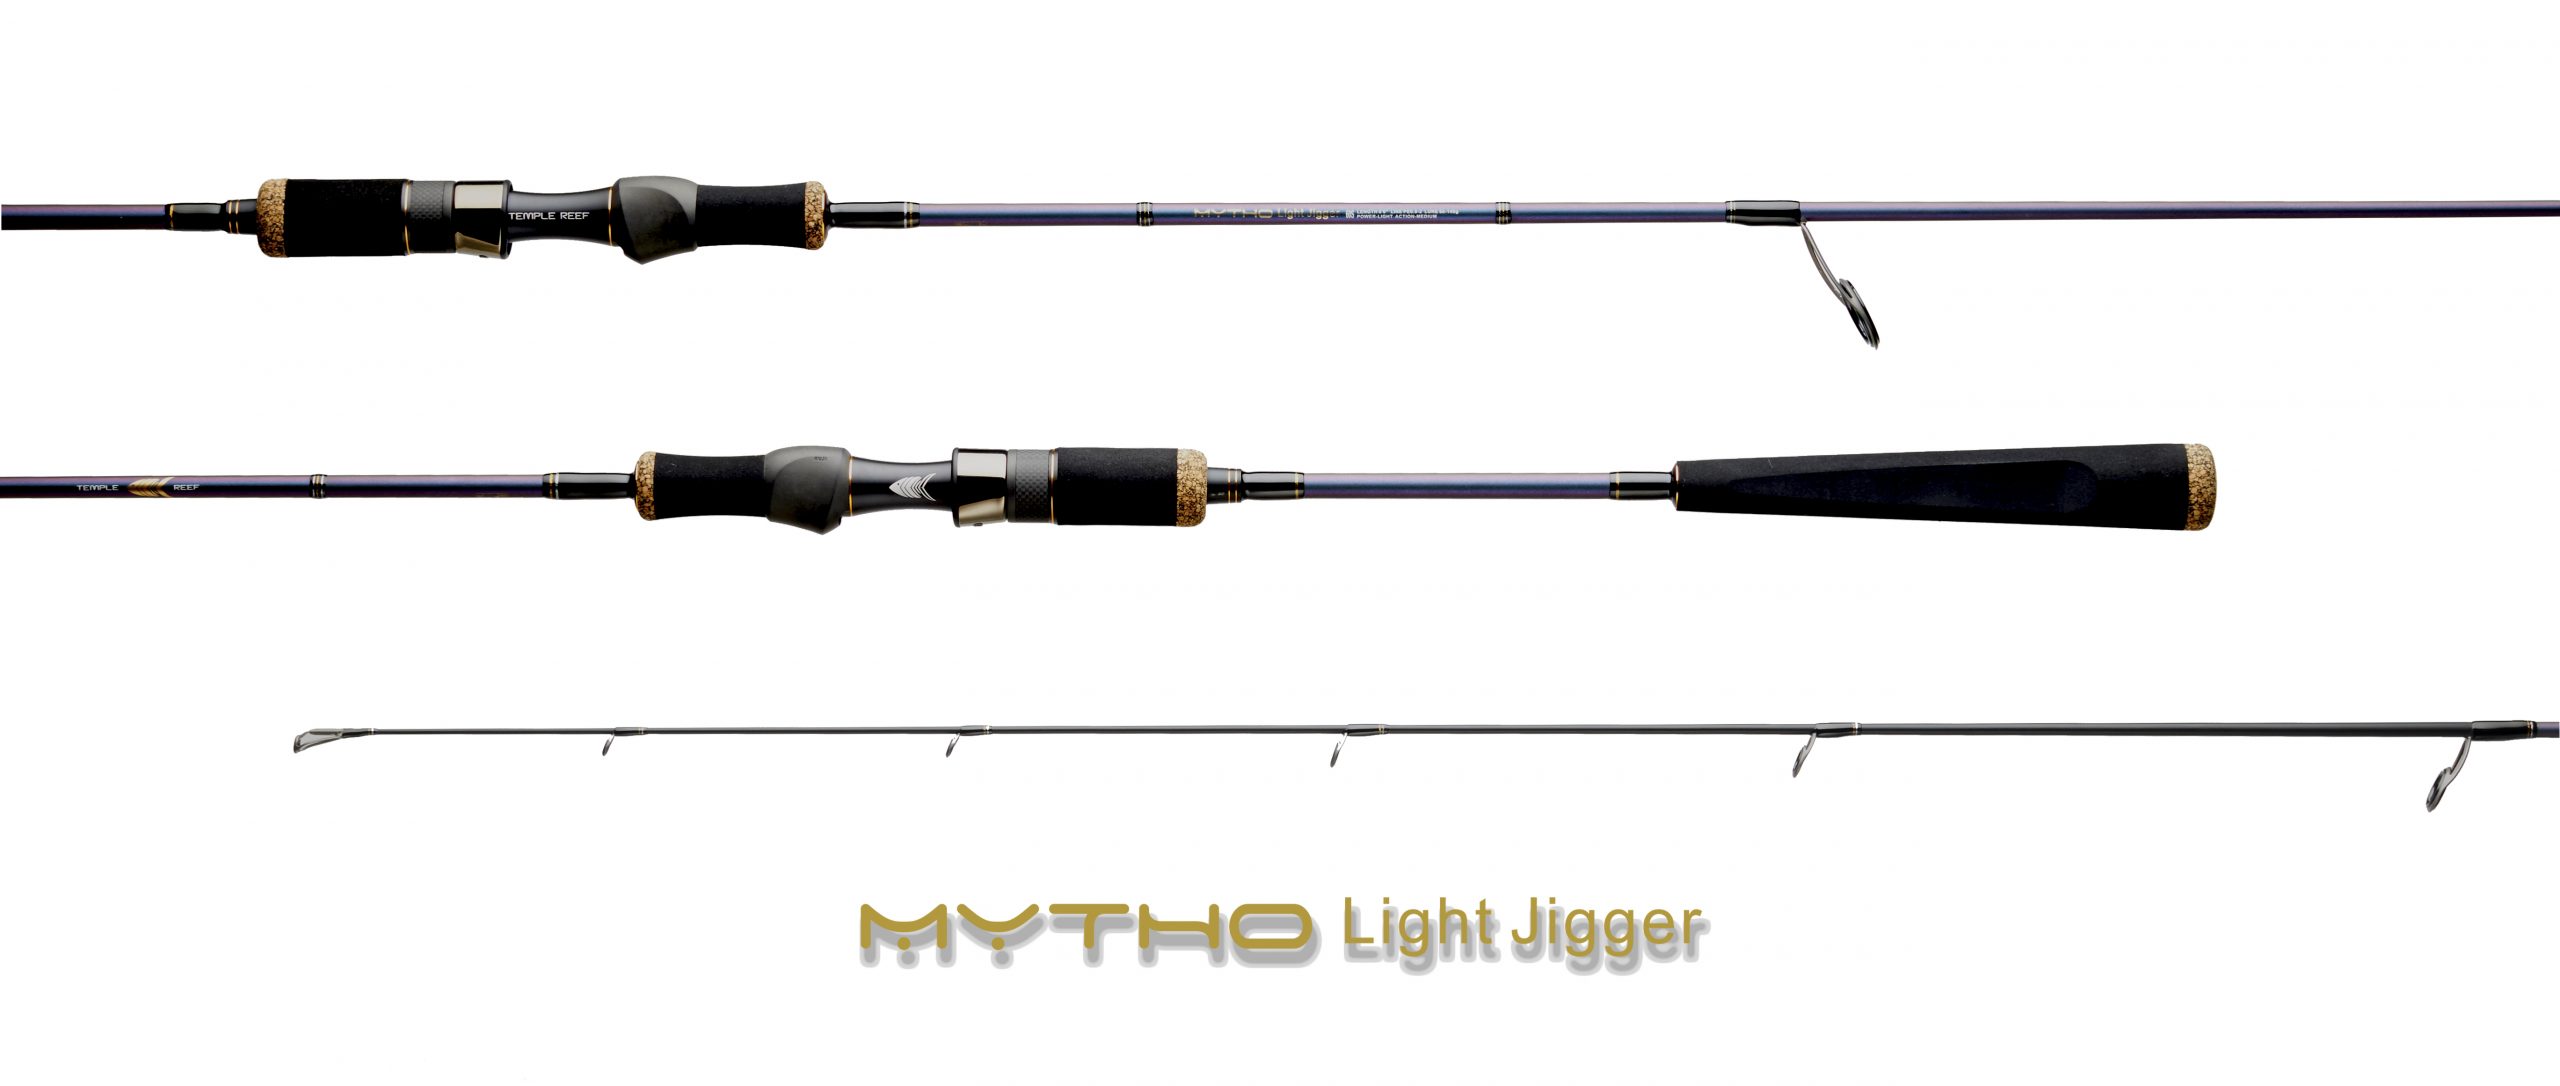 Temple Reef Mytho Light Jigger 510S Spin Rod